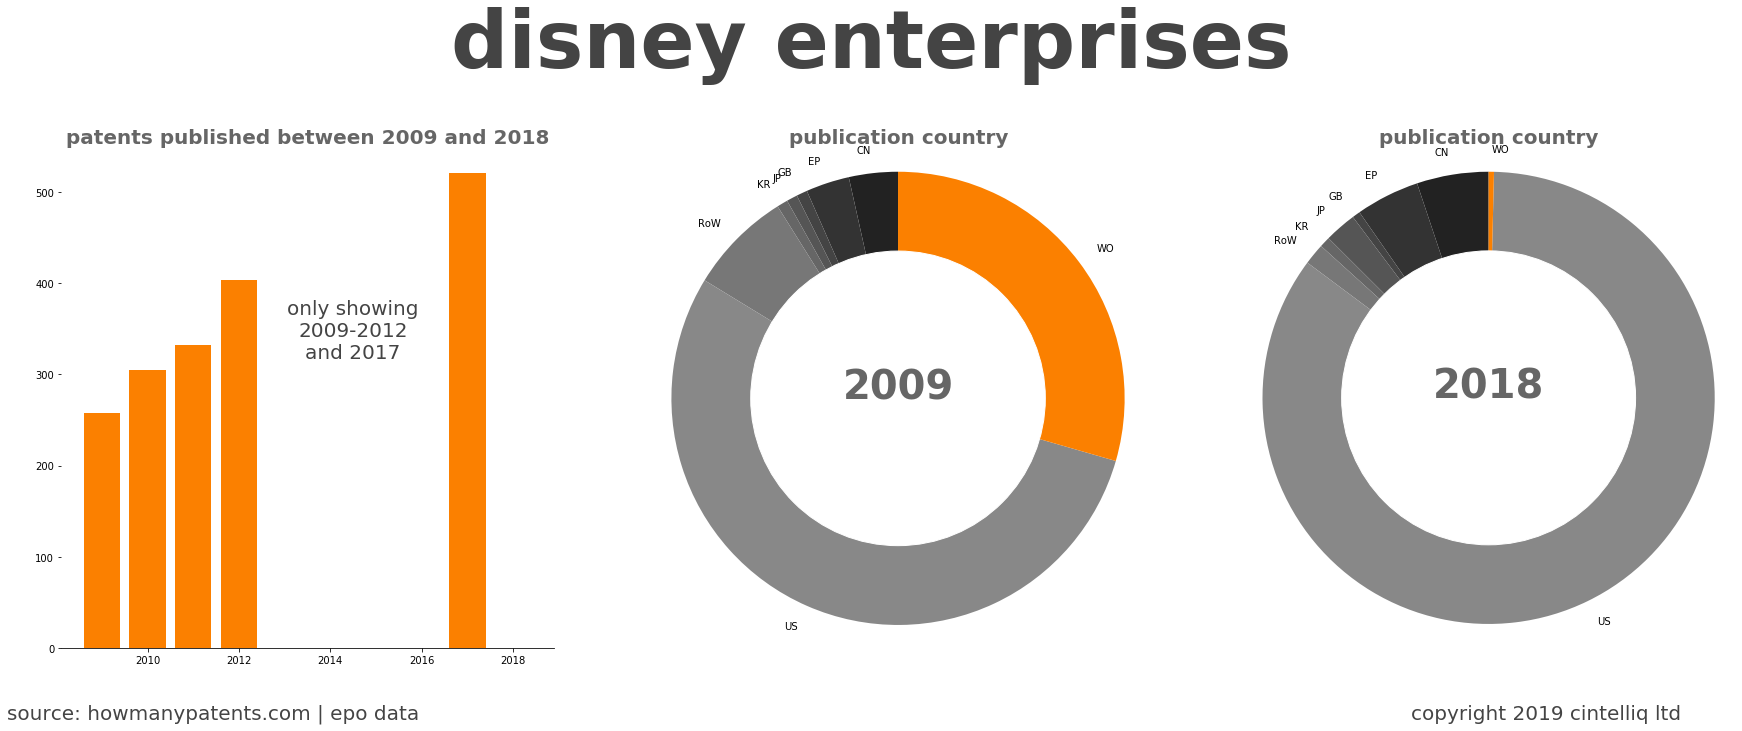 summary of patents for Disney Enterprises